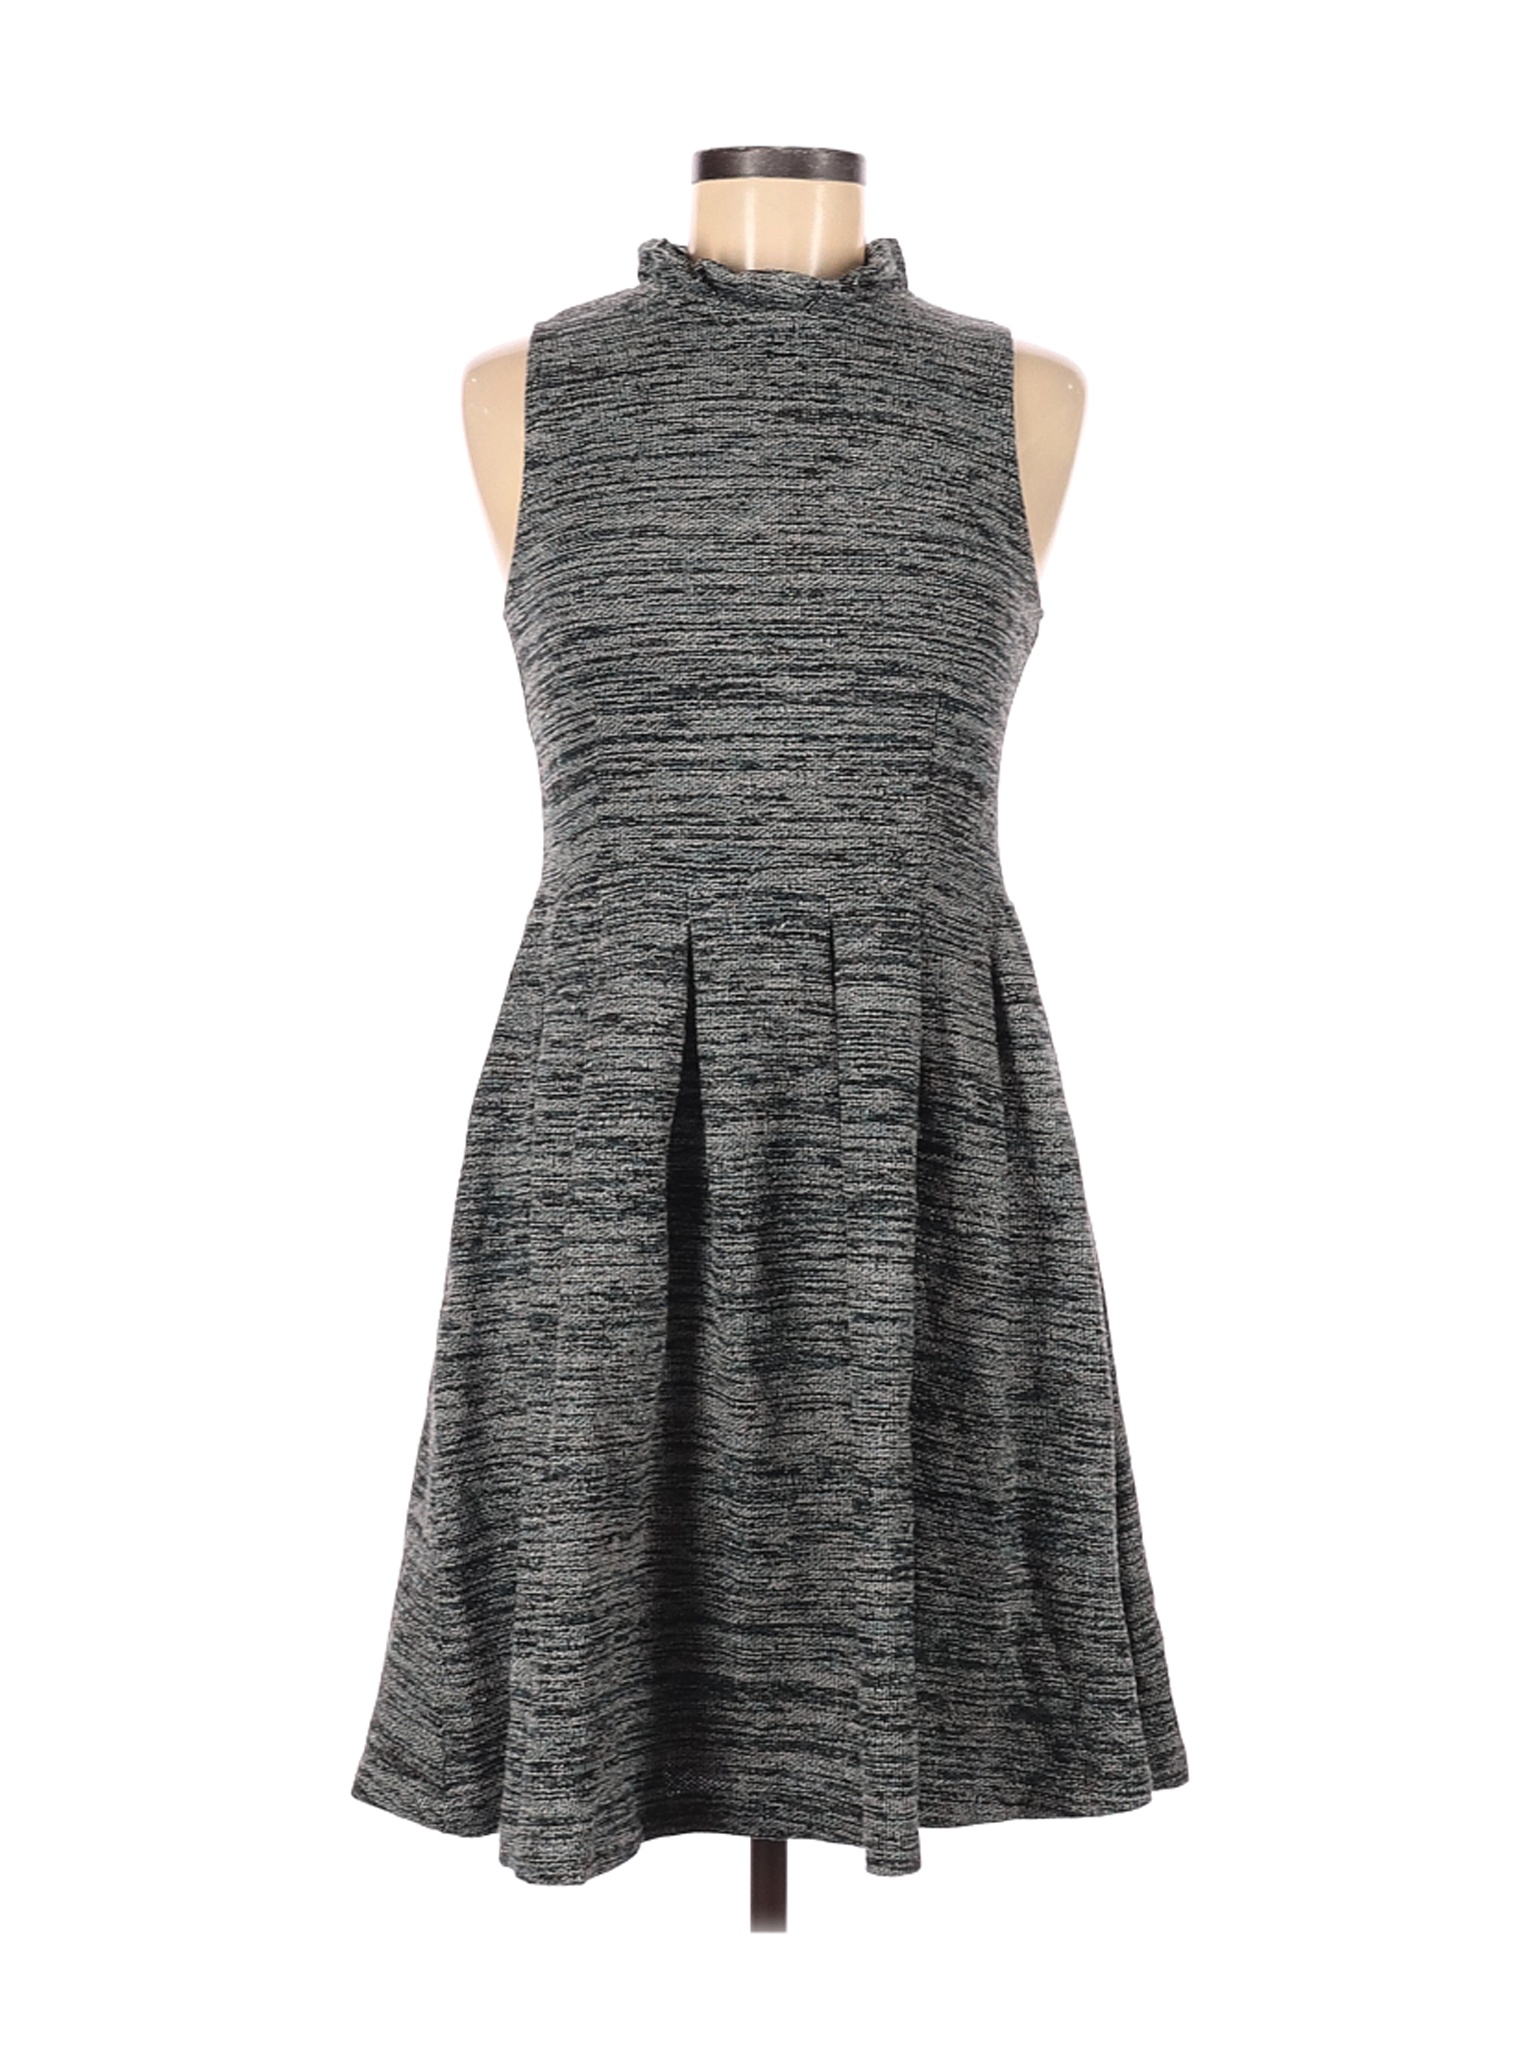 Ganni Gray Black Casual Dress Size M - 81% off | thredUP